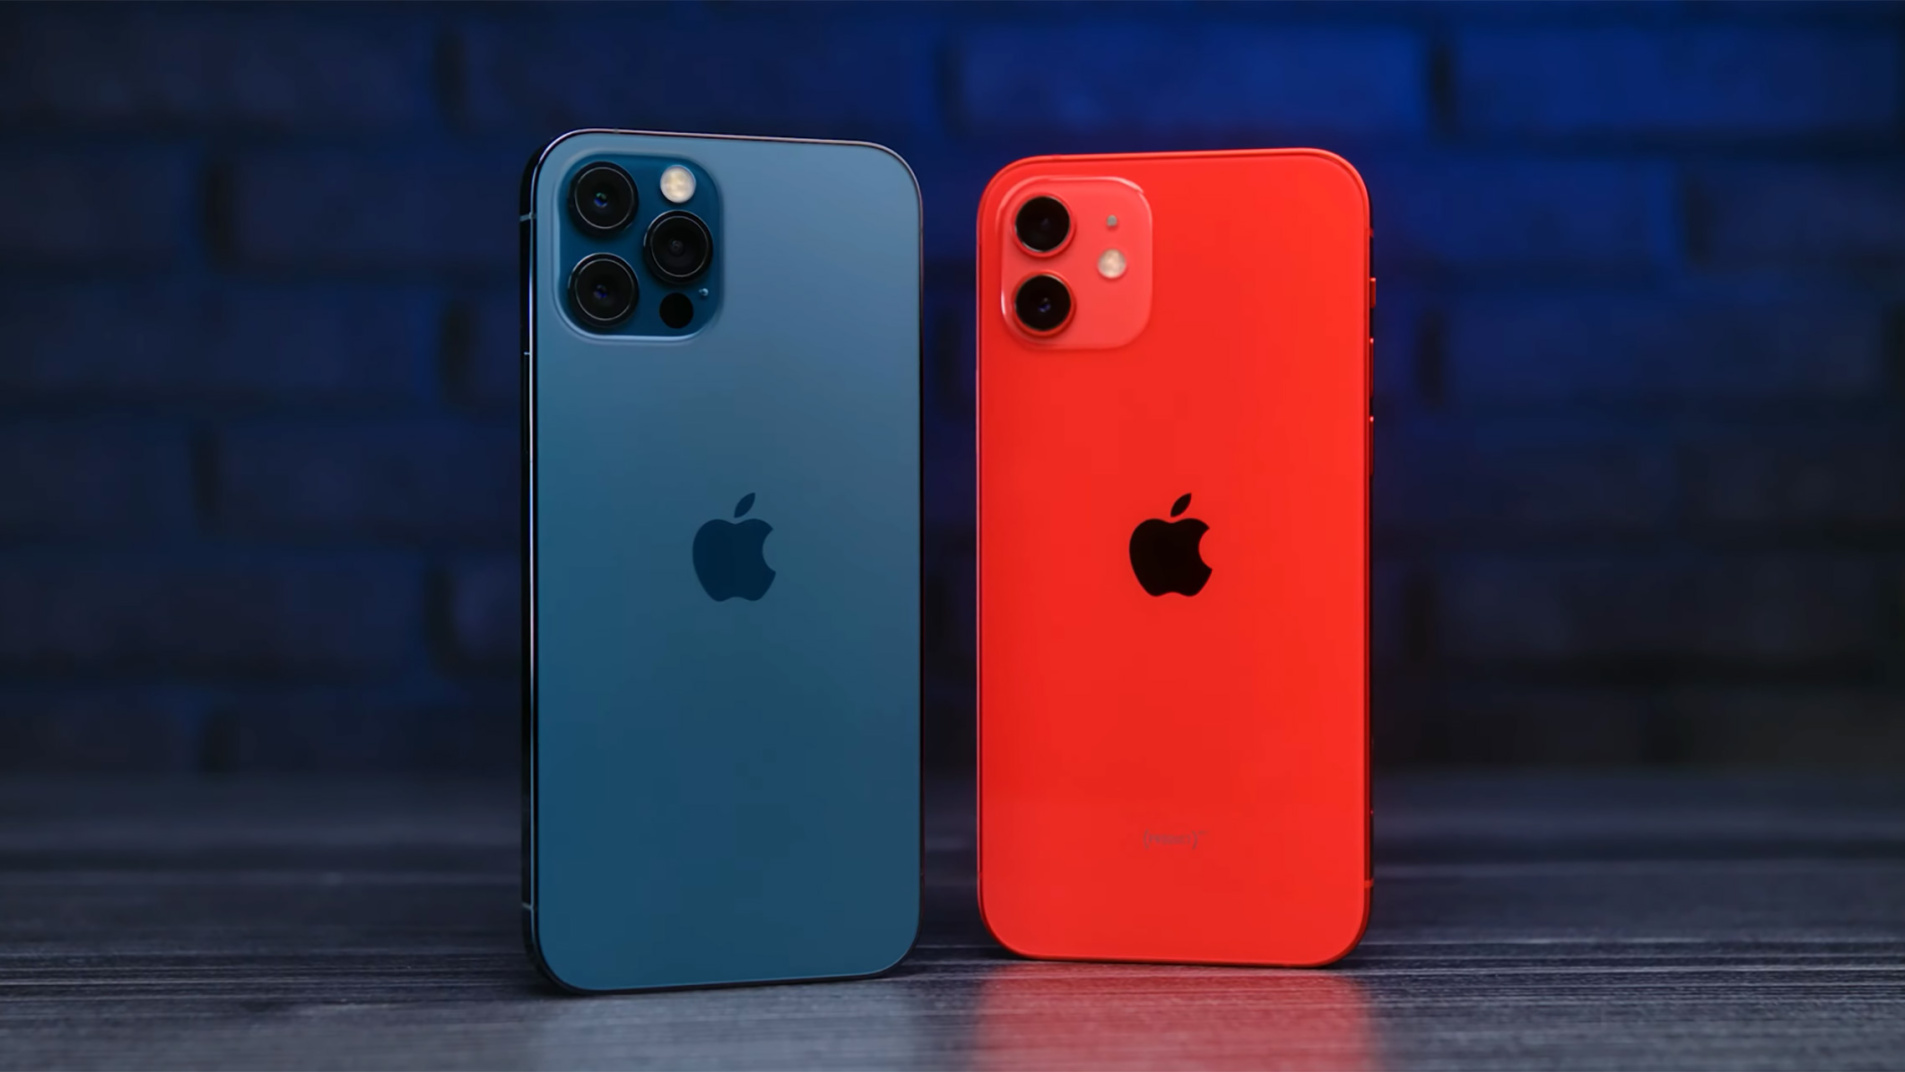 iPhone 12 i iPhone 12 Pro - test